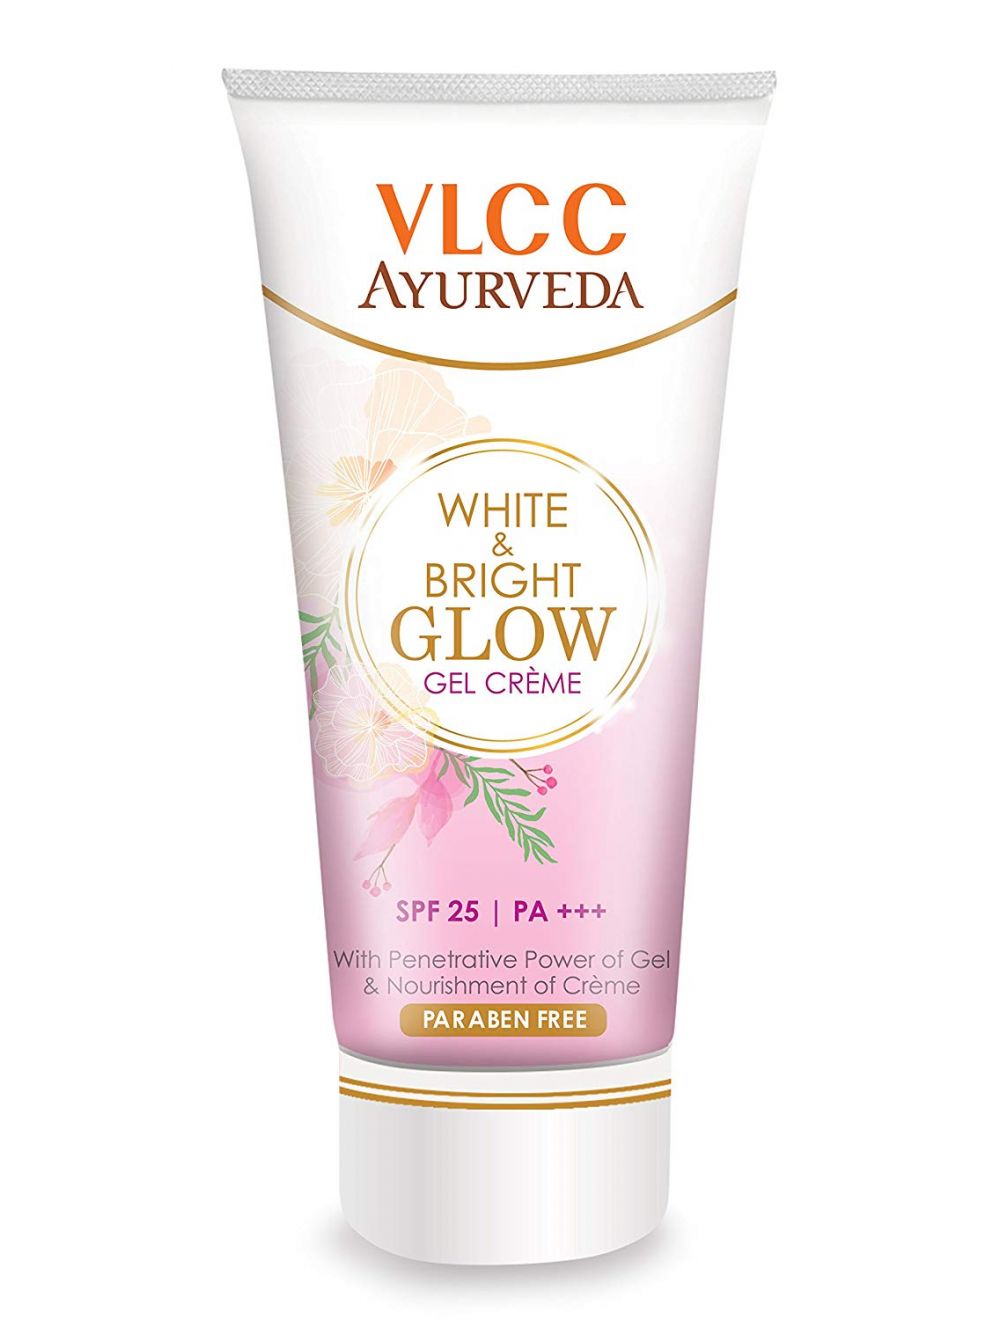 VLCC Party Glow Facial Kit + Free White & Bright Glow Gel - Niram